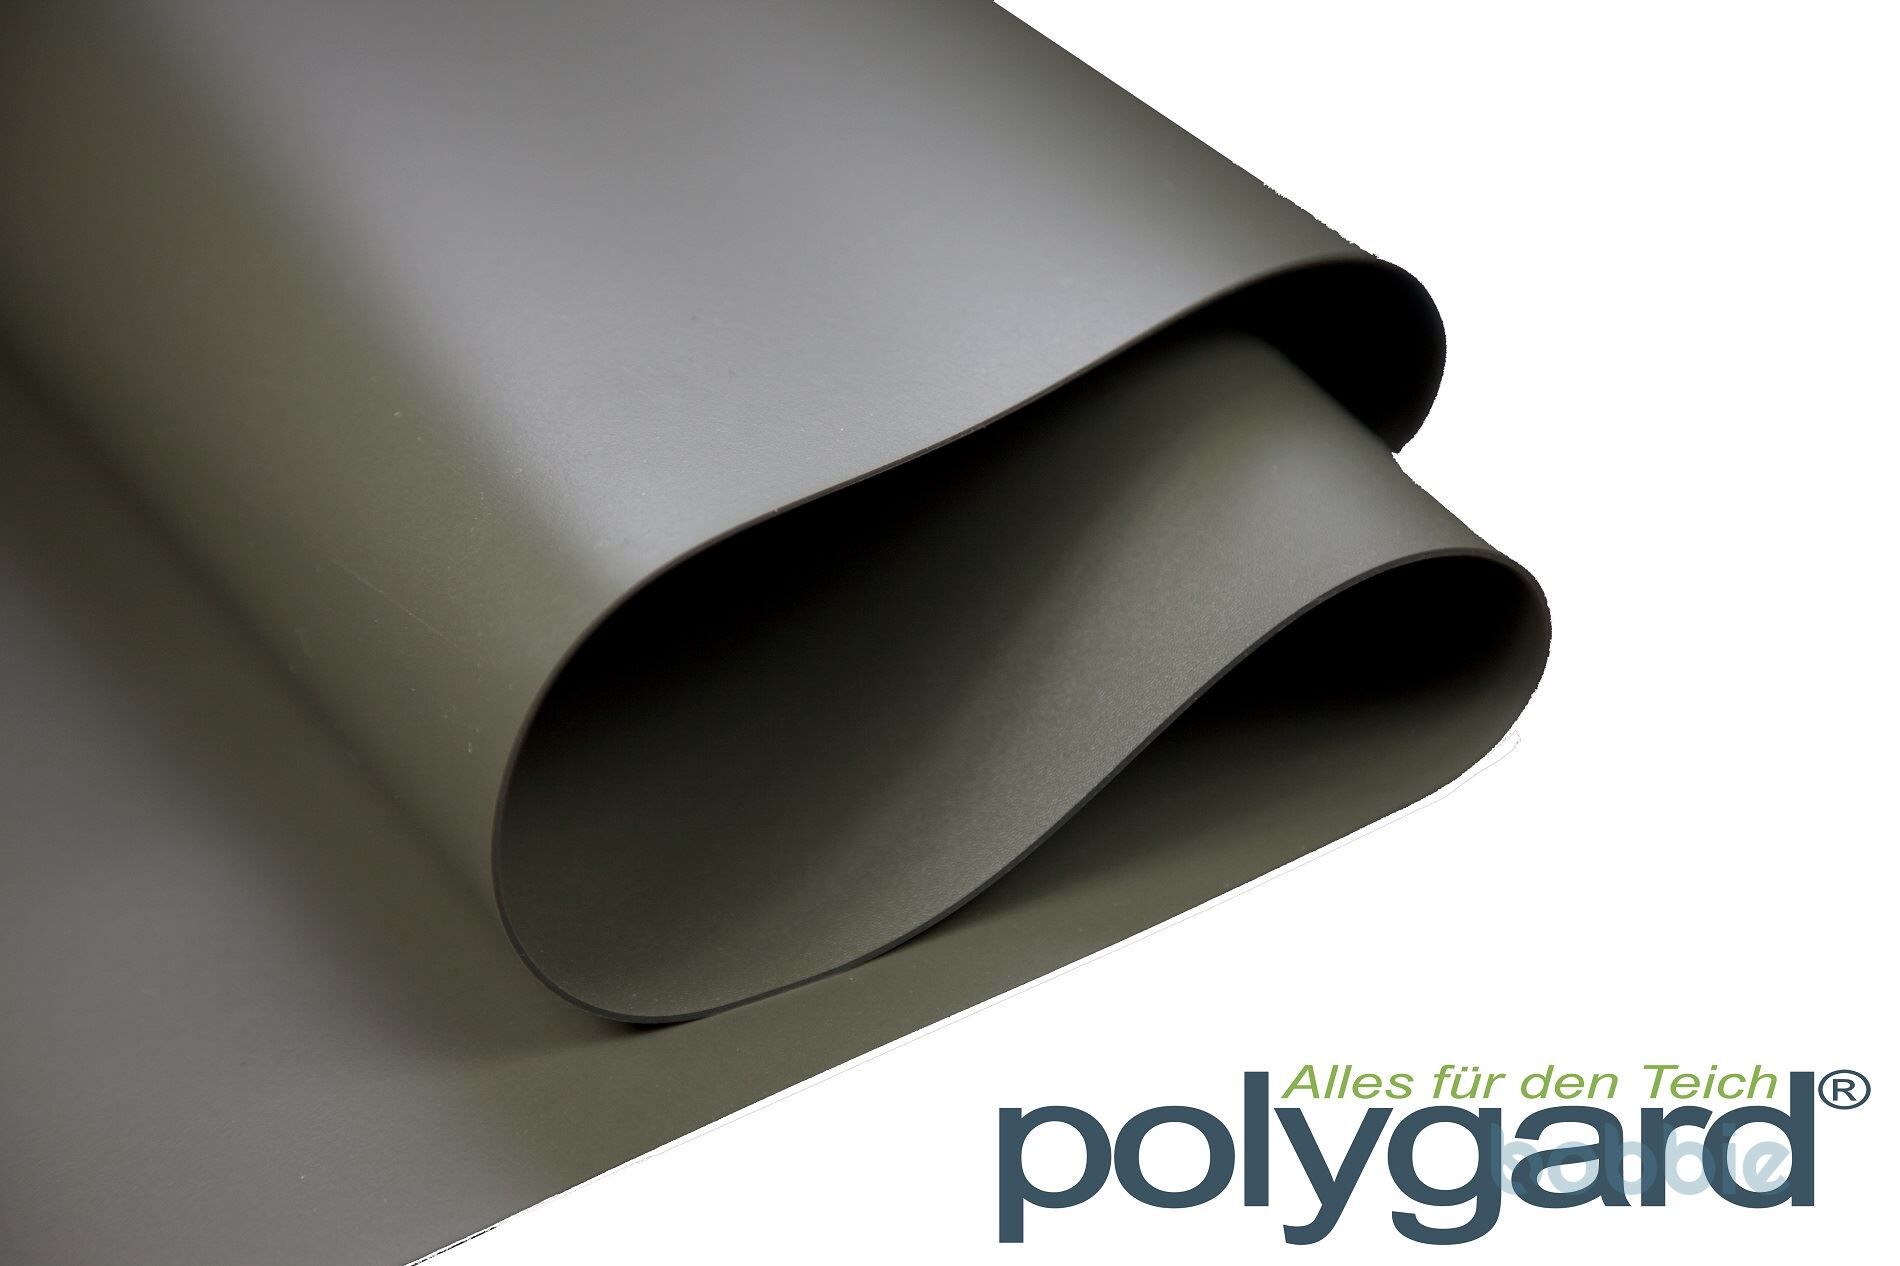 Polygard PVC Teichfolie 1mm oliv-grün PrePack - 6,0 x 15,0 m